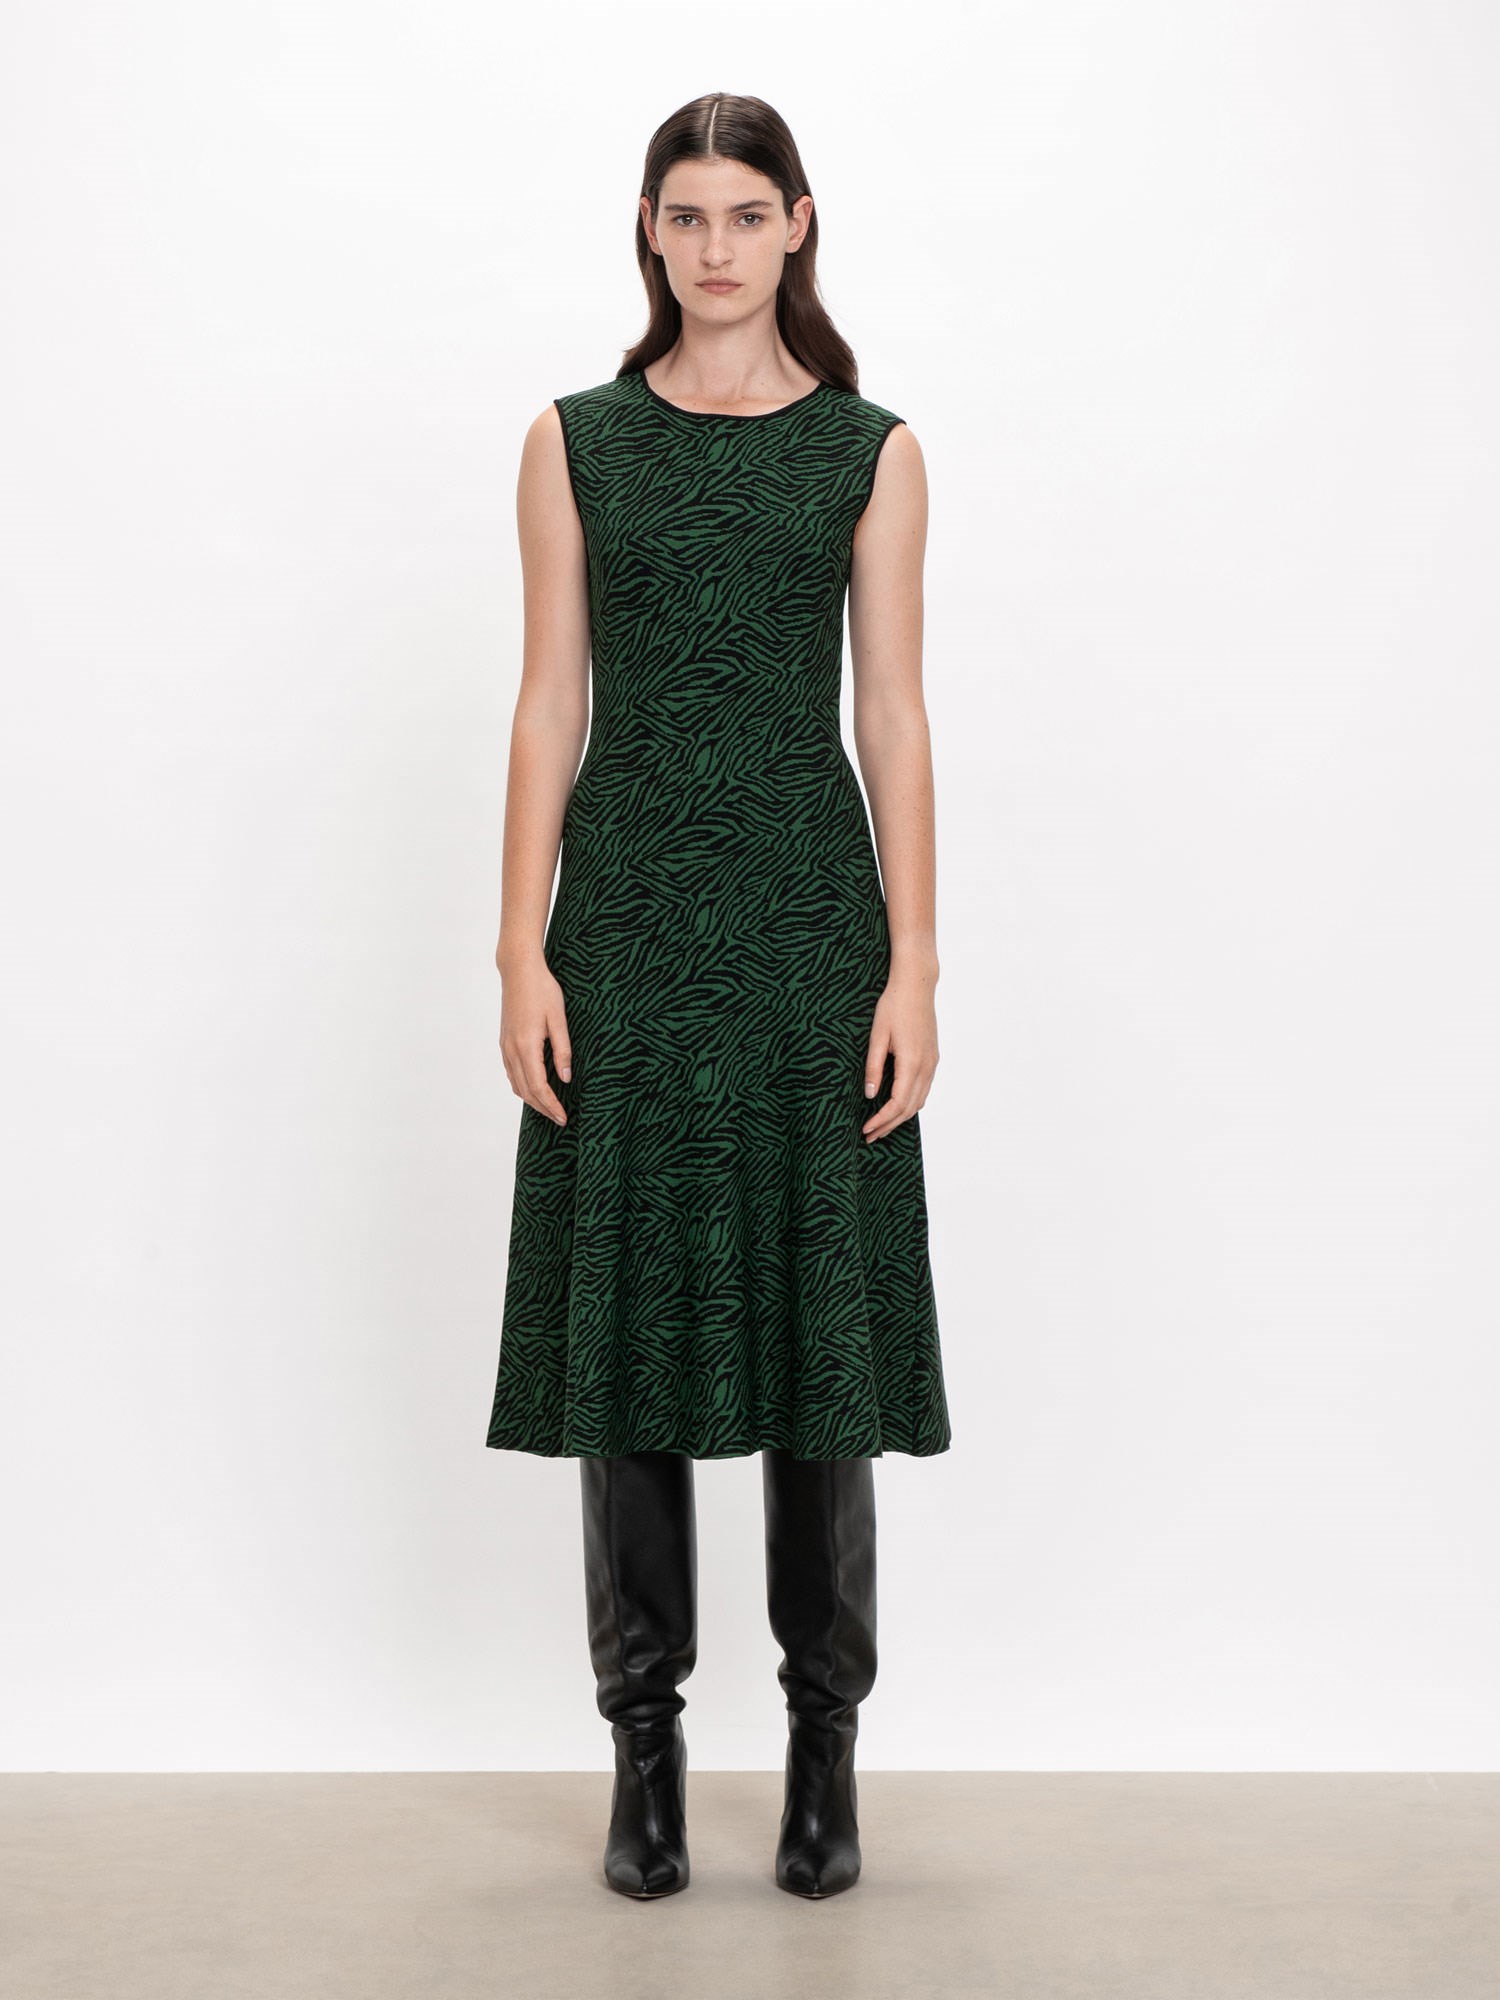 Zebra Jacquard Knit Dress | Buy Knitwear Online - Veronika Maine